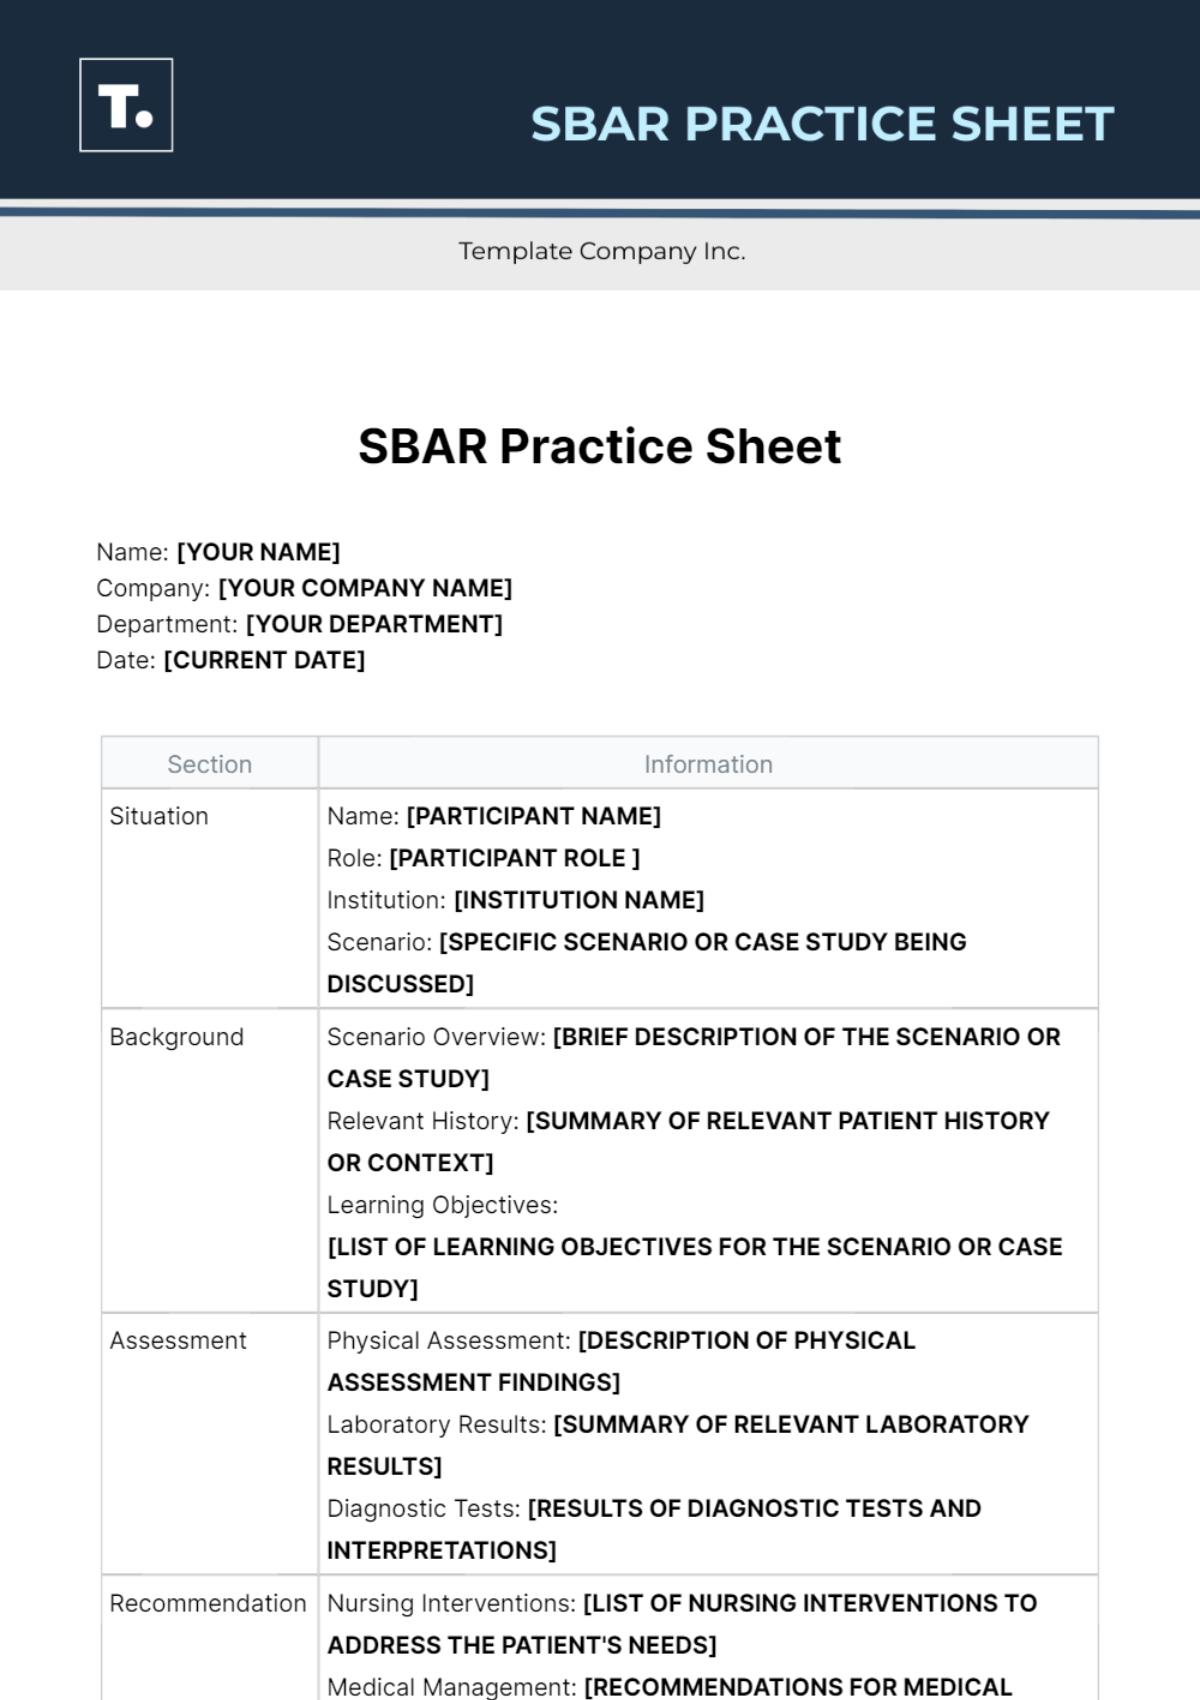 SBAR Practice Sheet Template